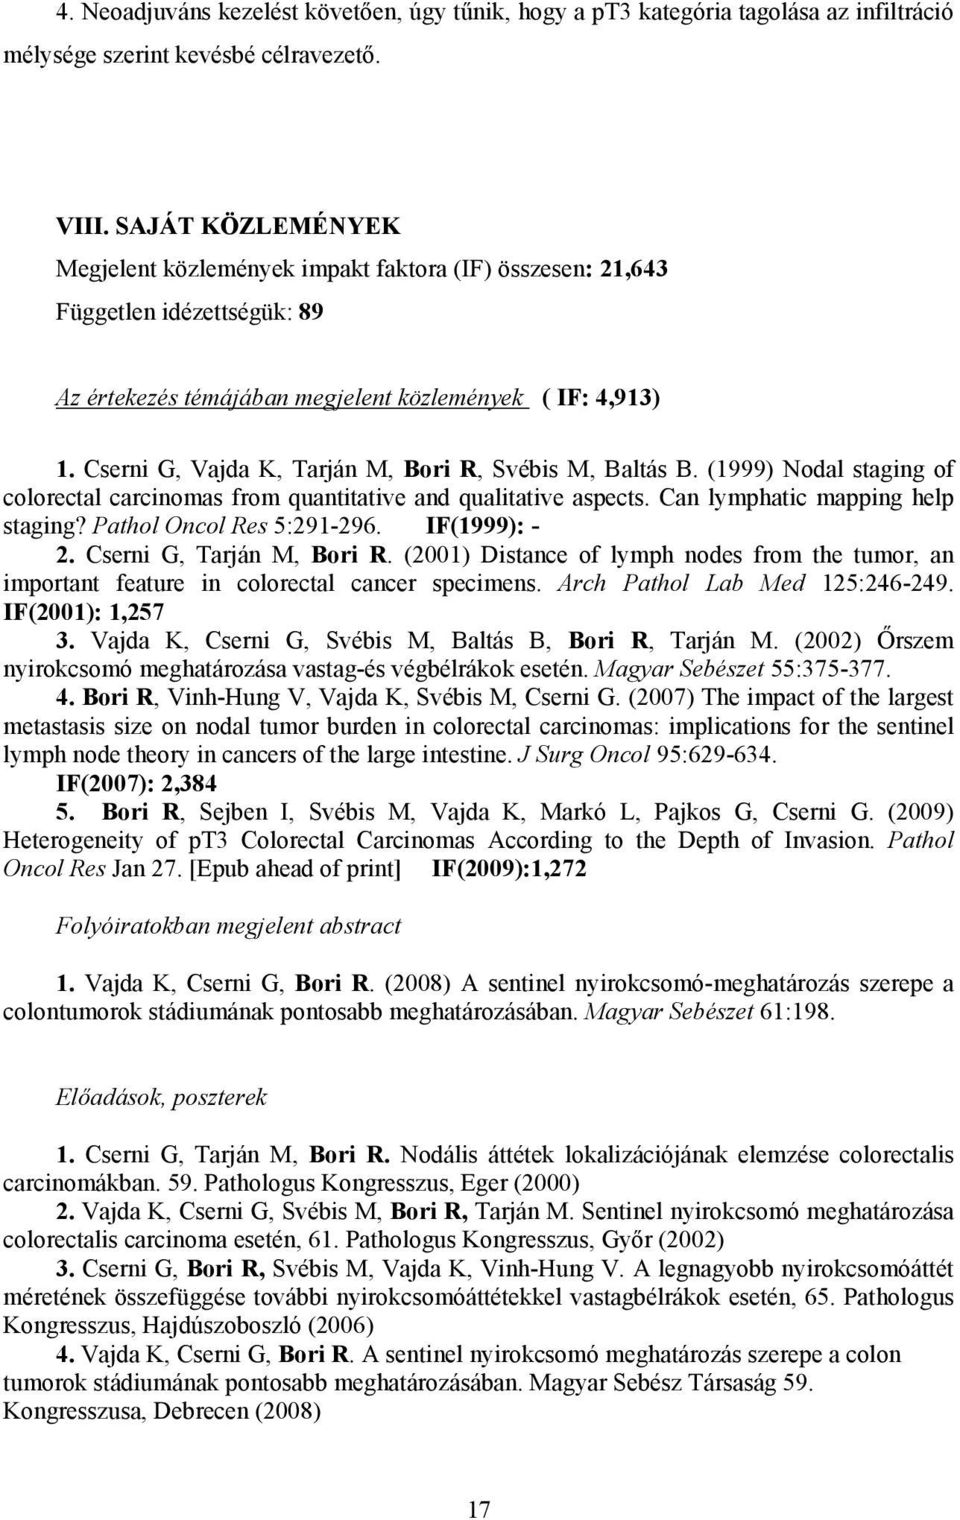 Cserni G, Vajda K, Tarján M, Bori R, Svébis M, Baltás B. (1999) Nodal staging of colorectal carcinomas from quantitative and qualitative aspects. Can lymphatic mapping help staging?